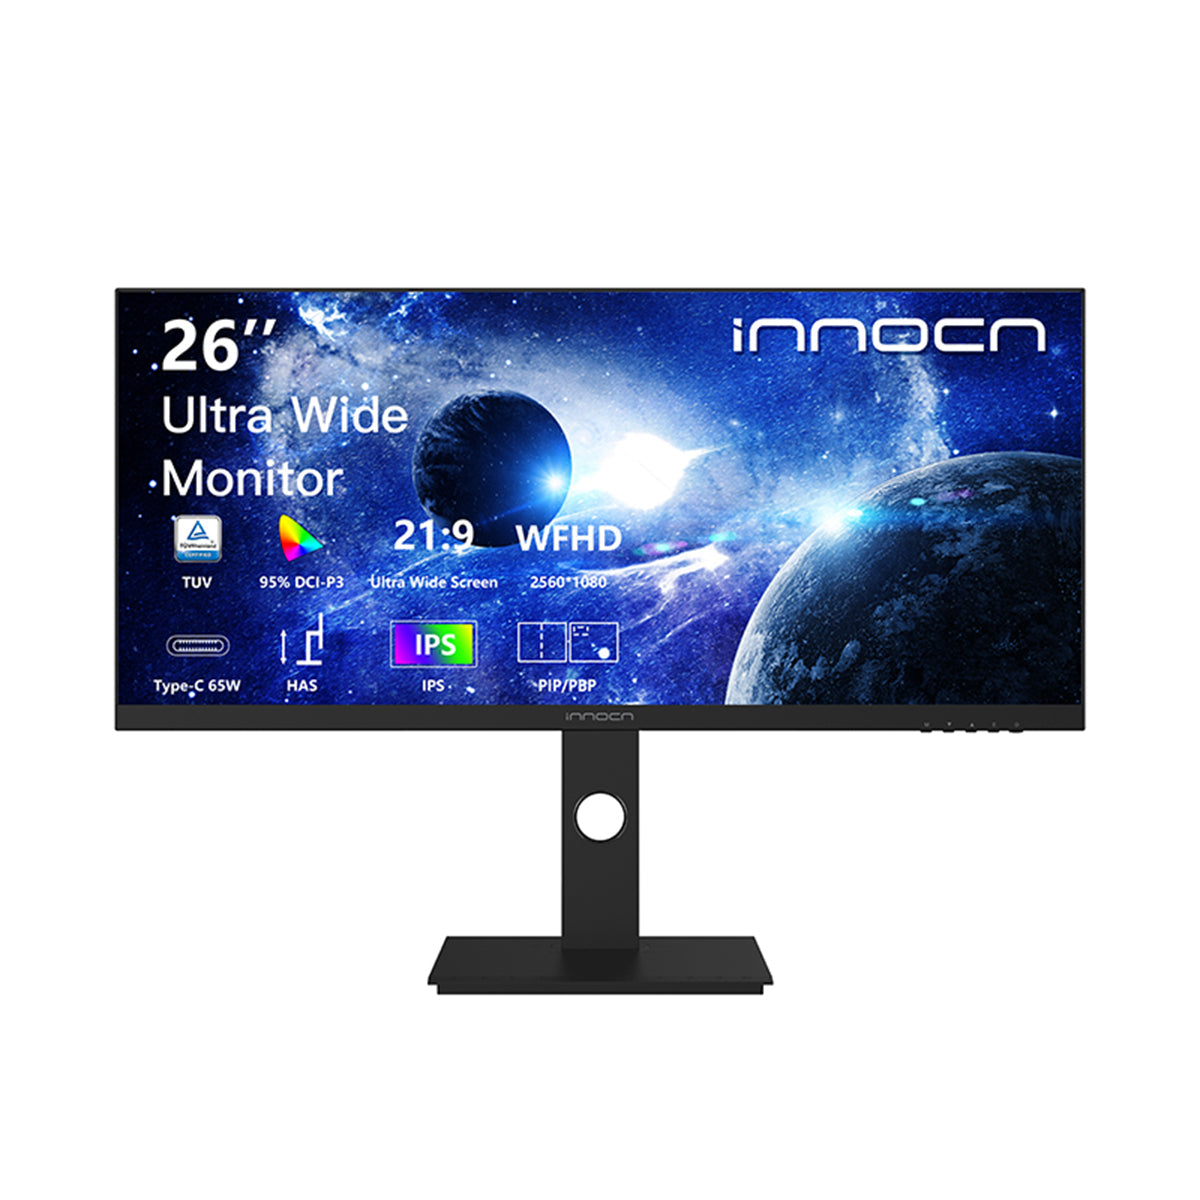 INNOCN 26-Inch Ultrawide Screen Monitor (Refurbished) - 26C1F-D